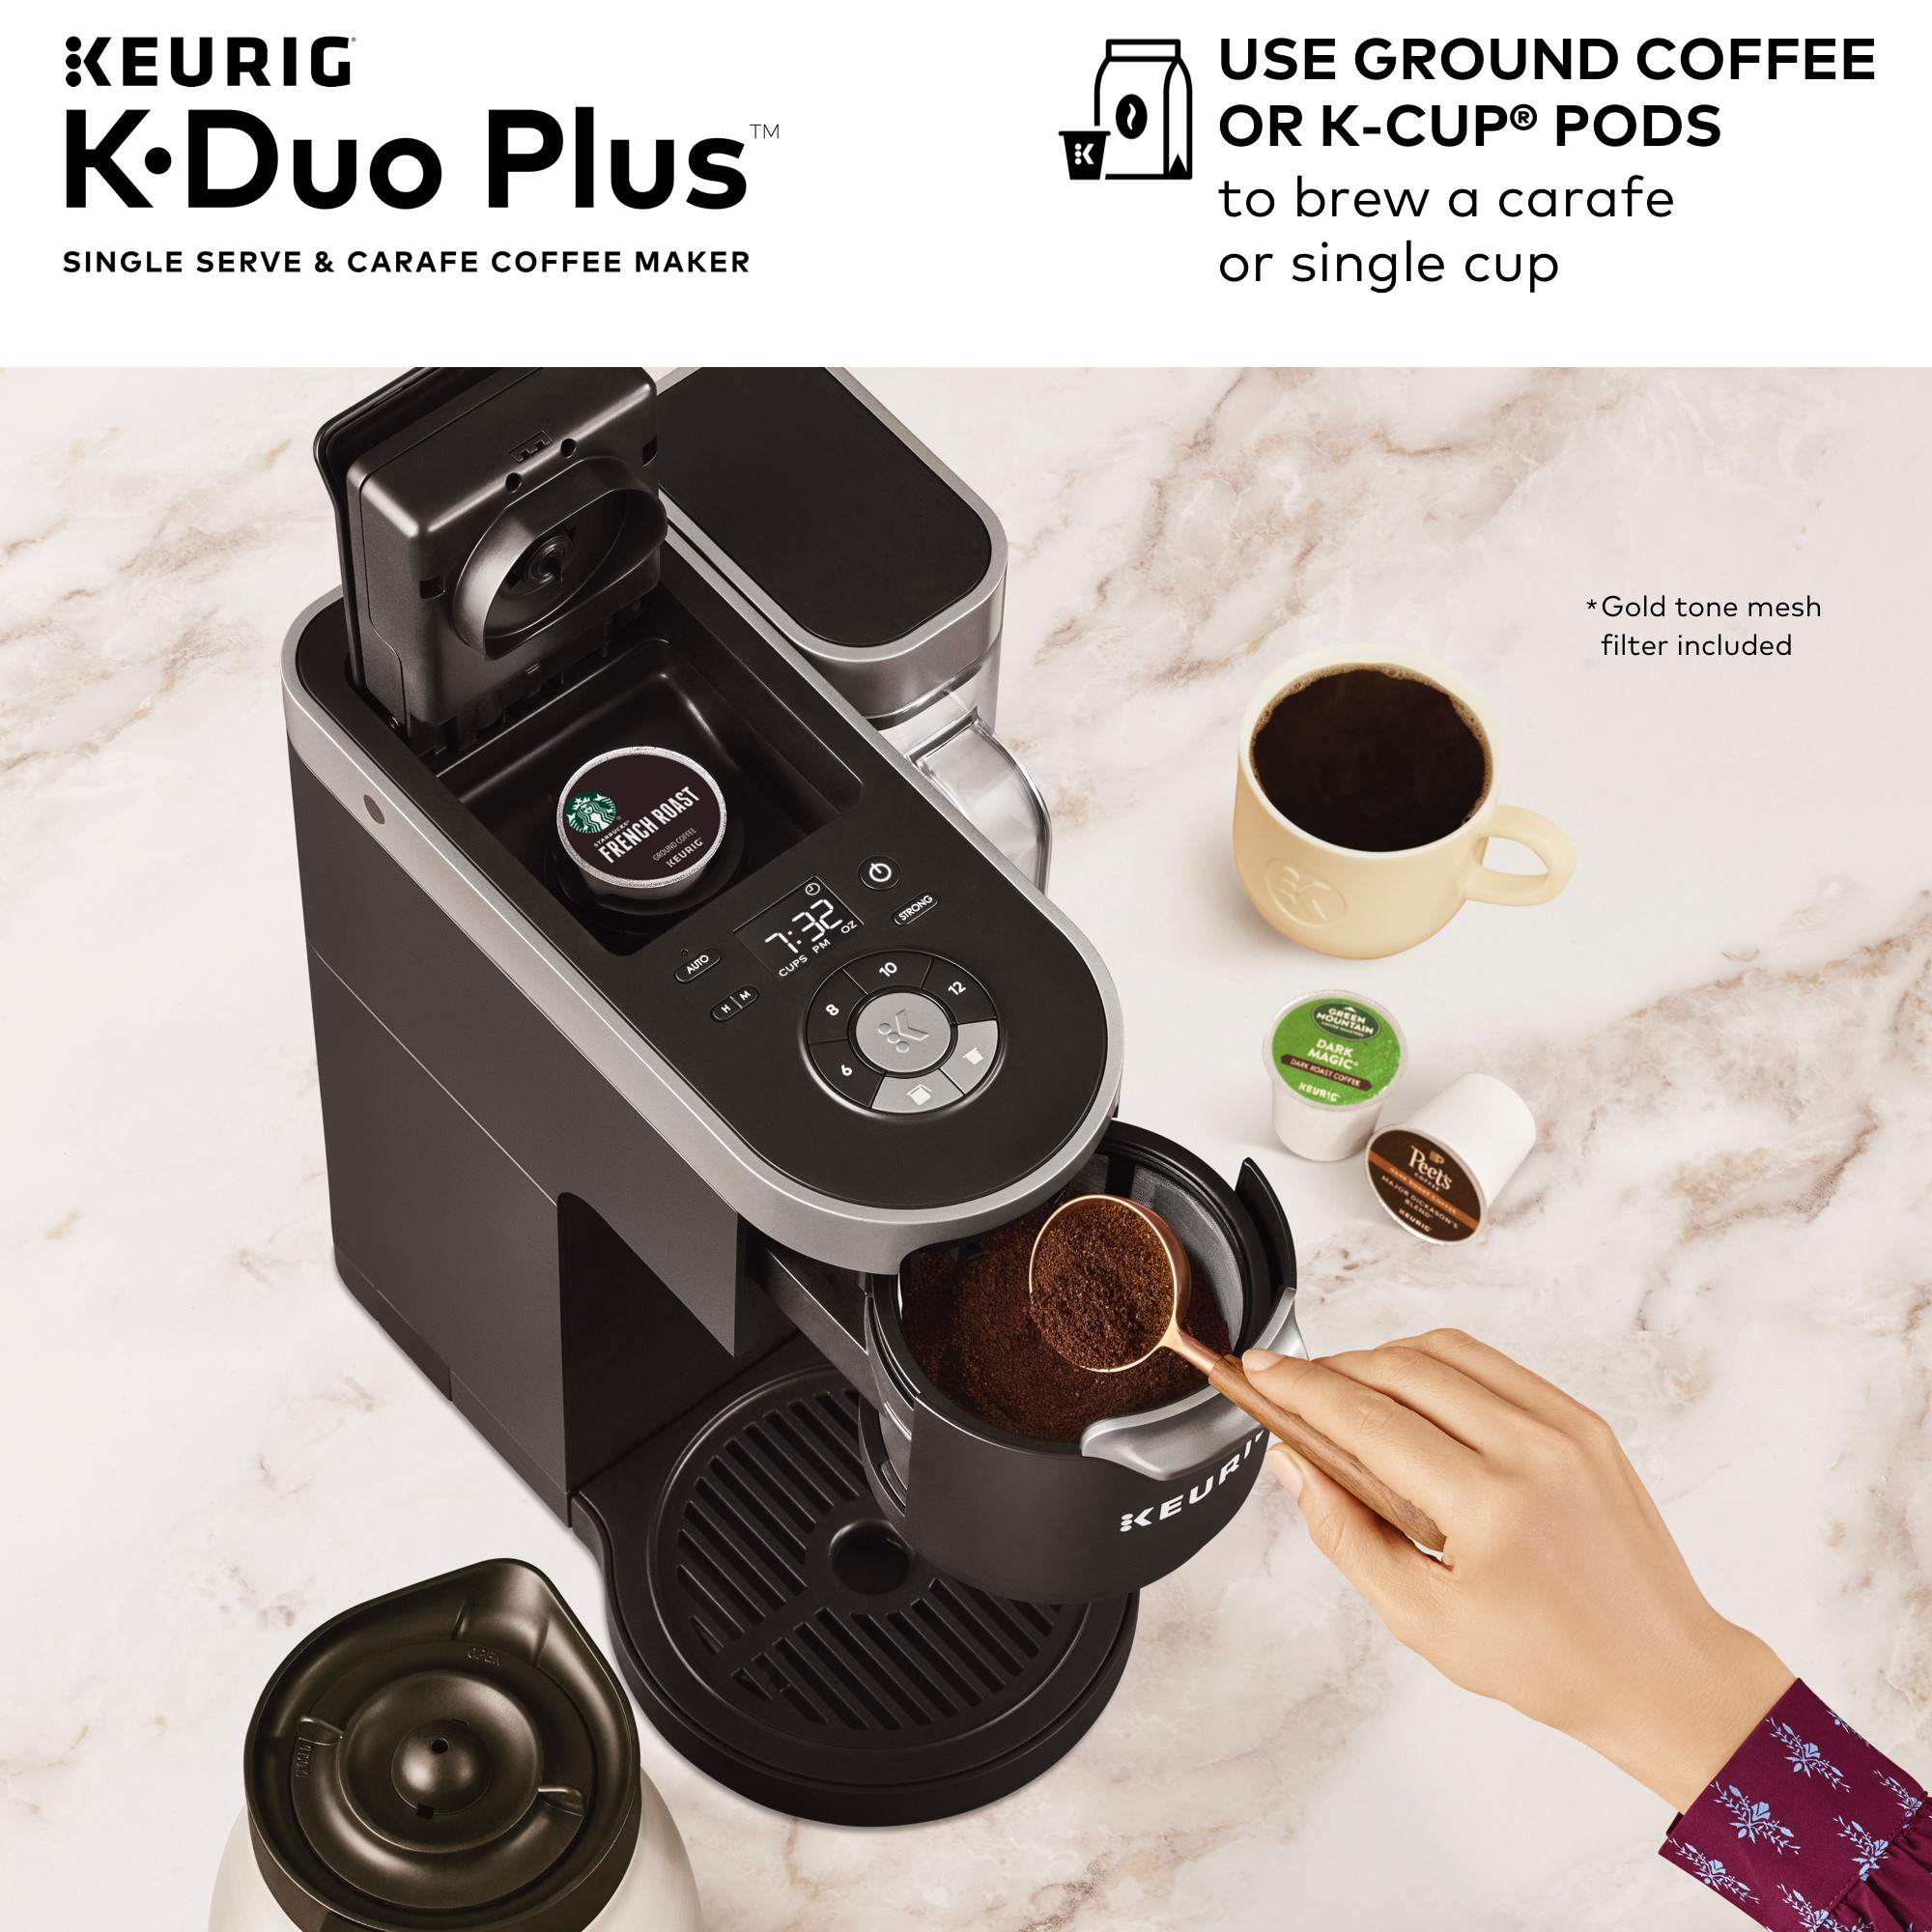 Keurig K-Duo Plus Single Serve & Carafe Coffee Maker - image 18 of 24